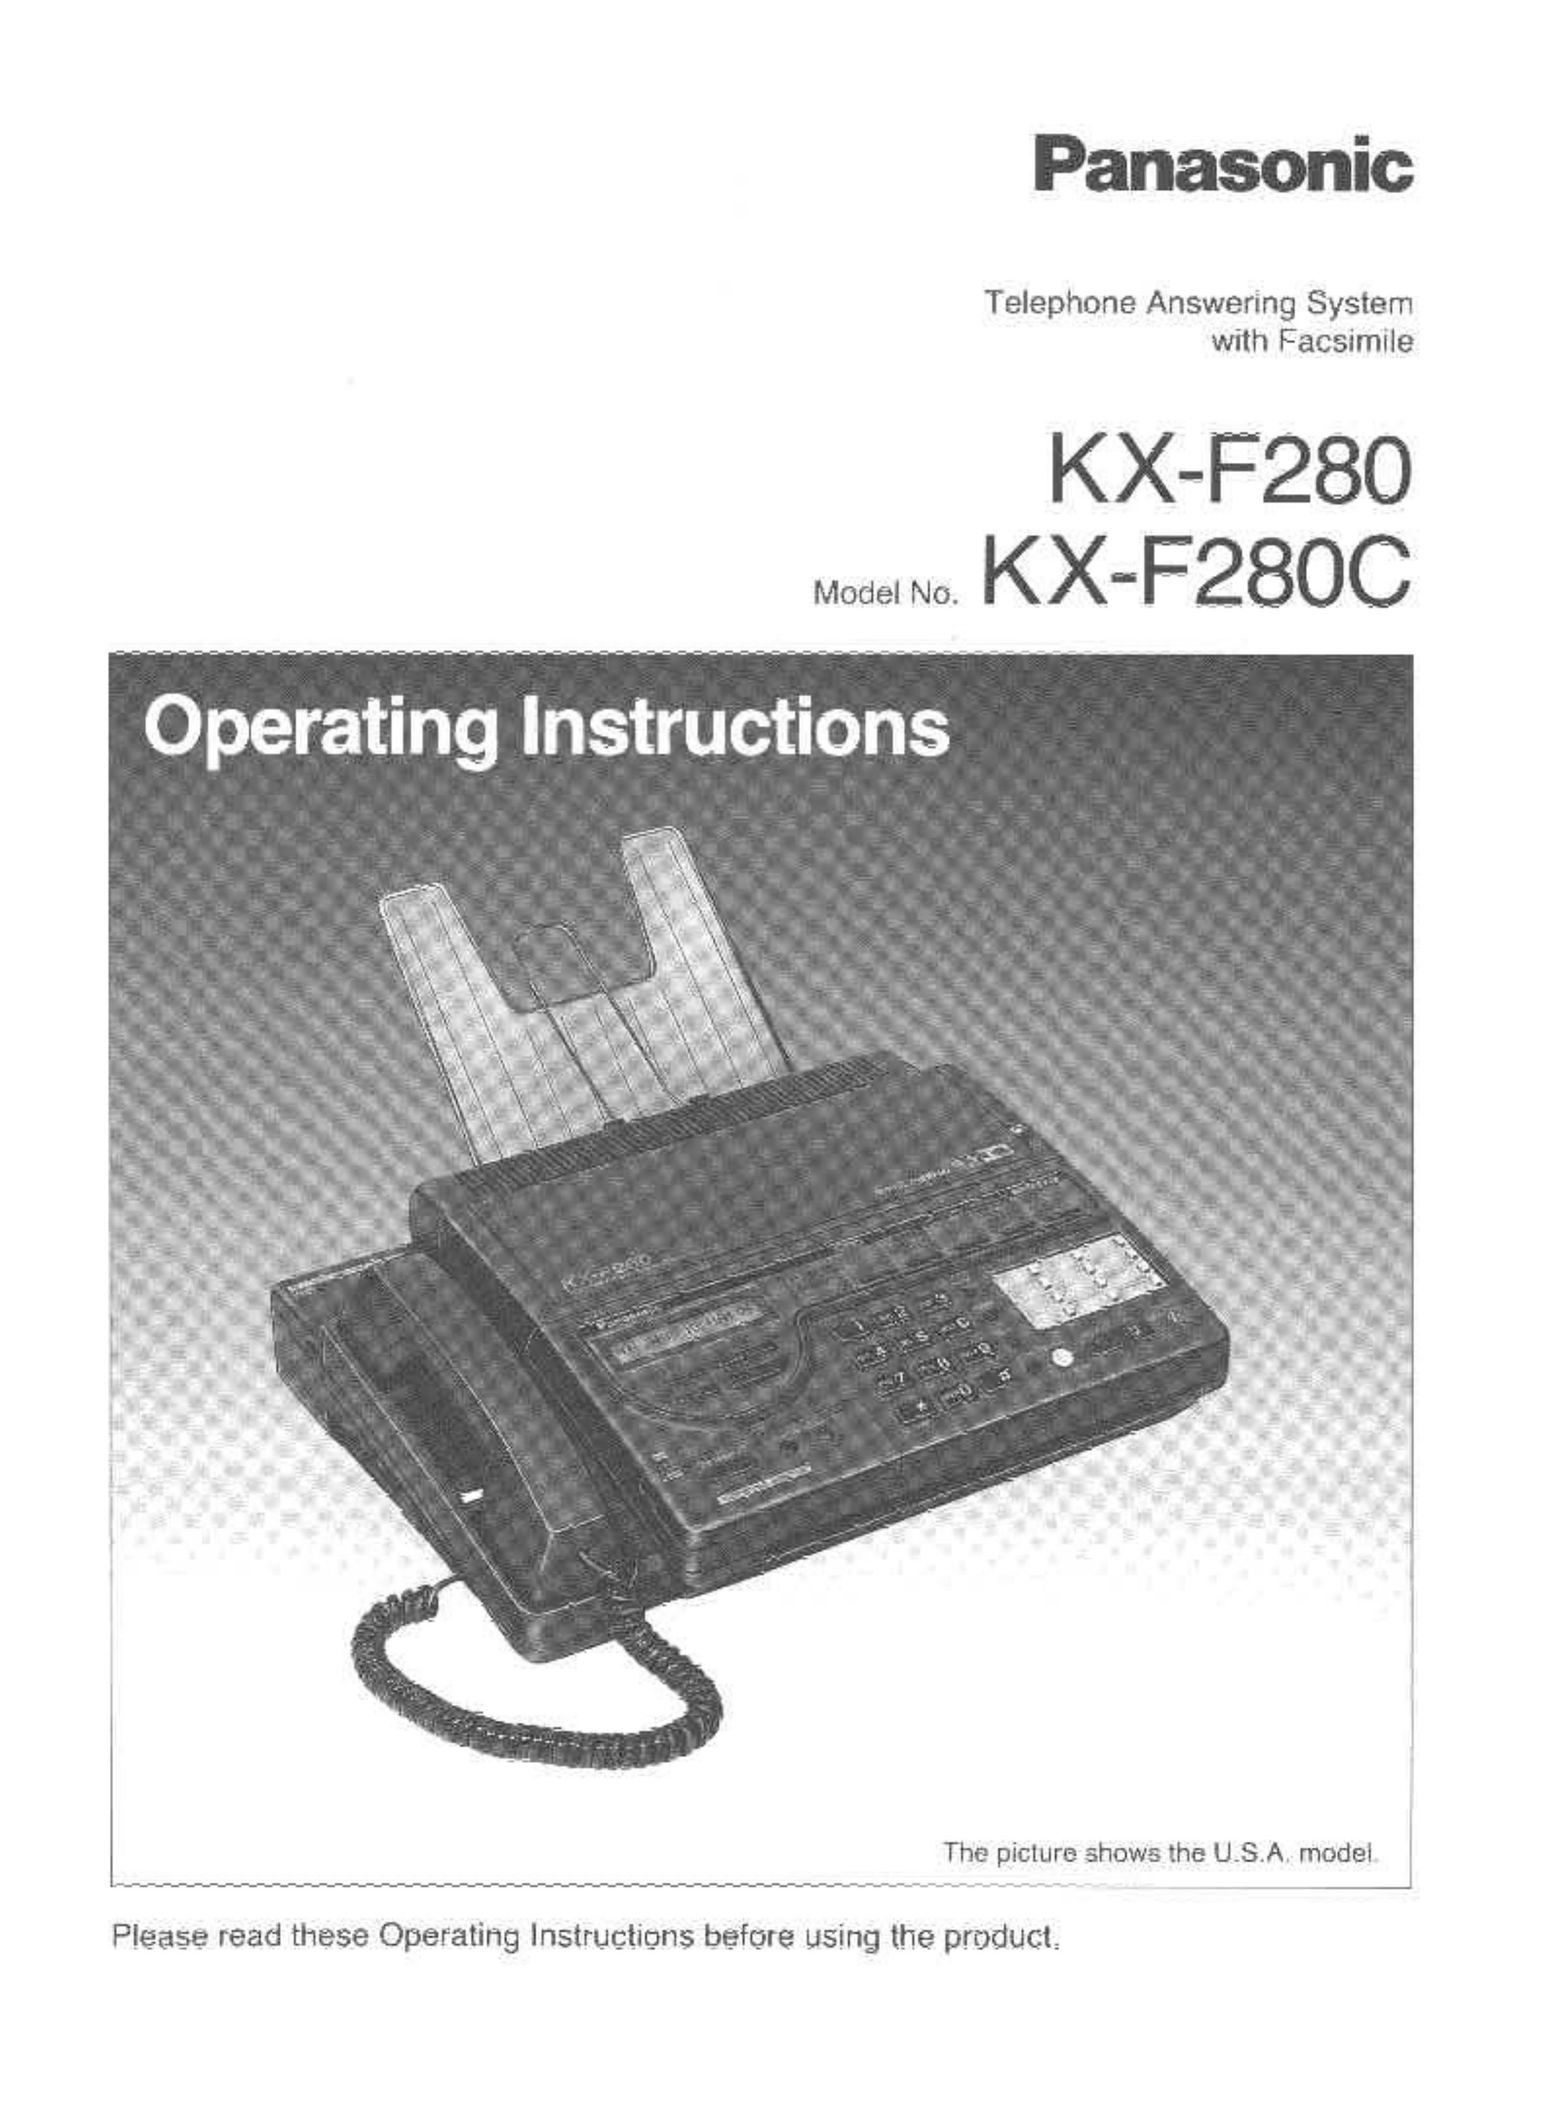 Panasonic KX-F280C Answering Machine User Manual